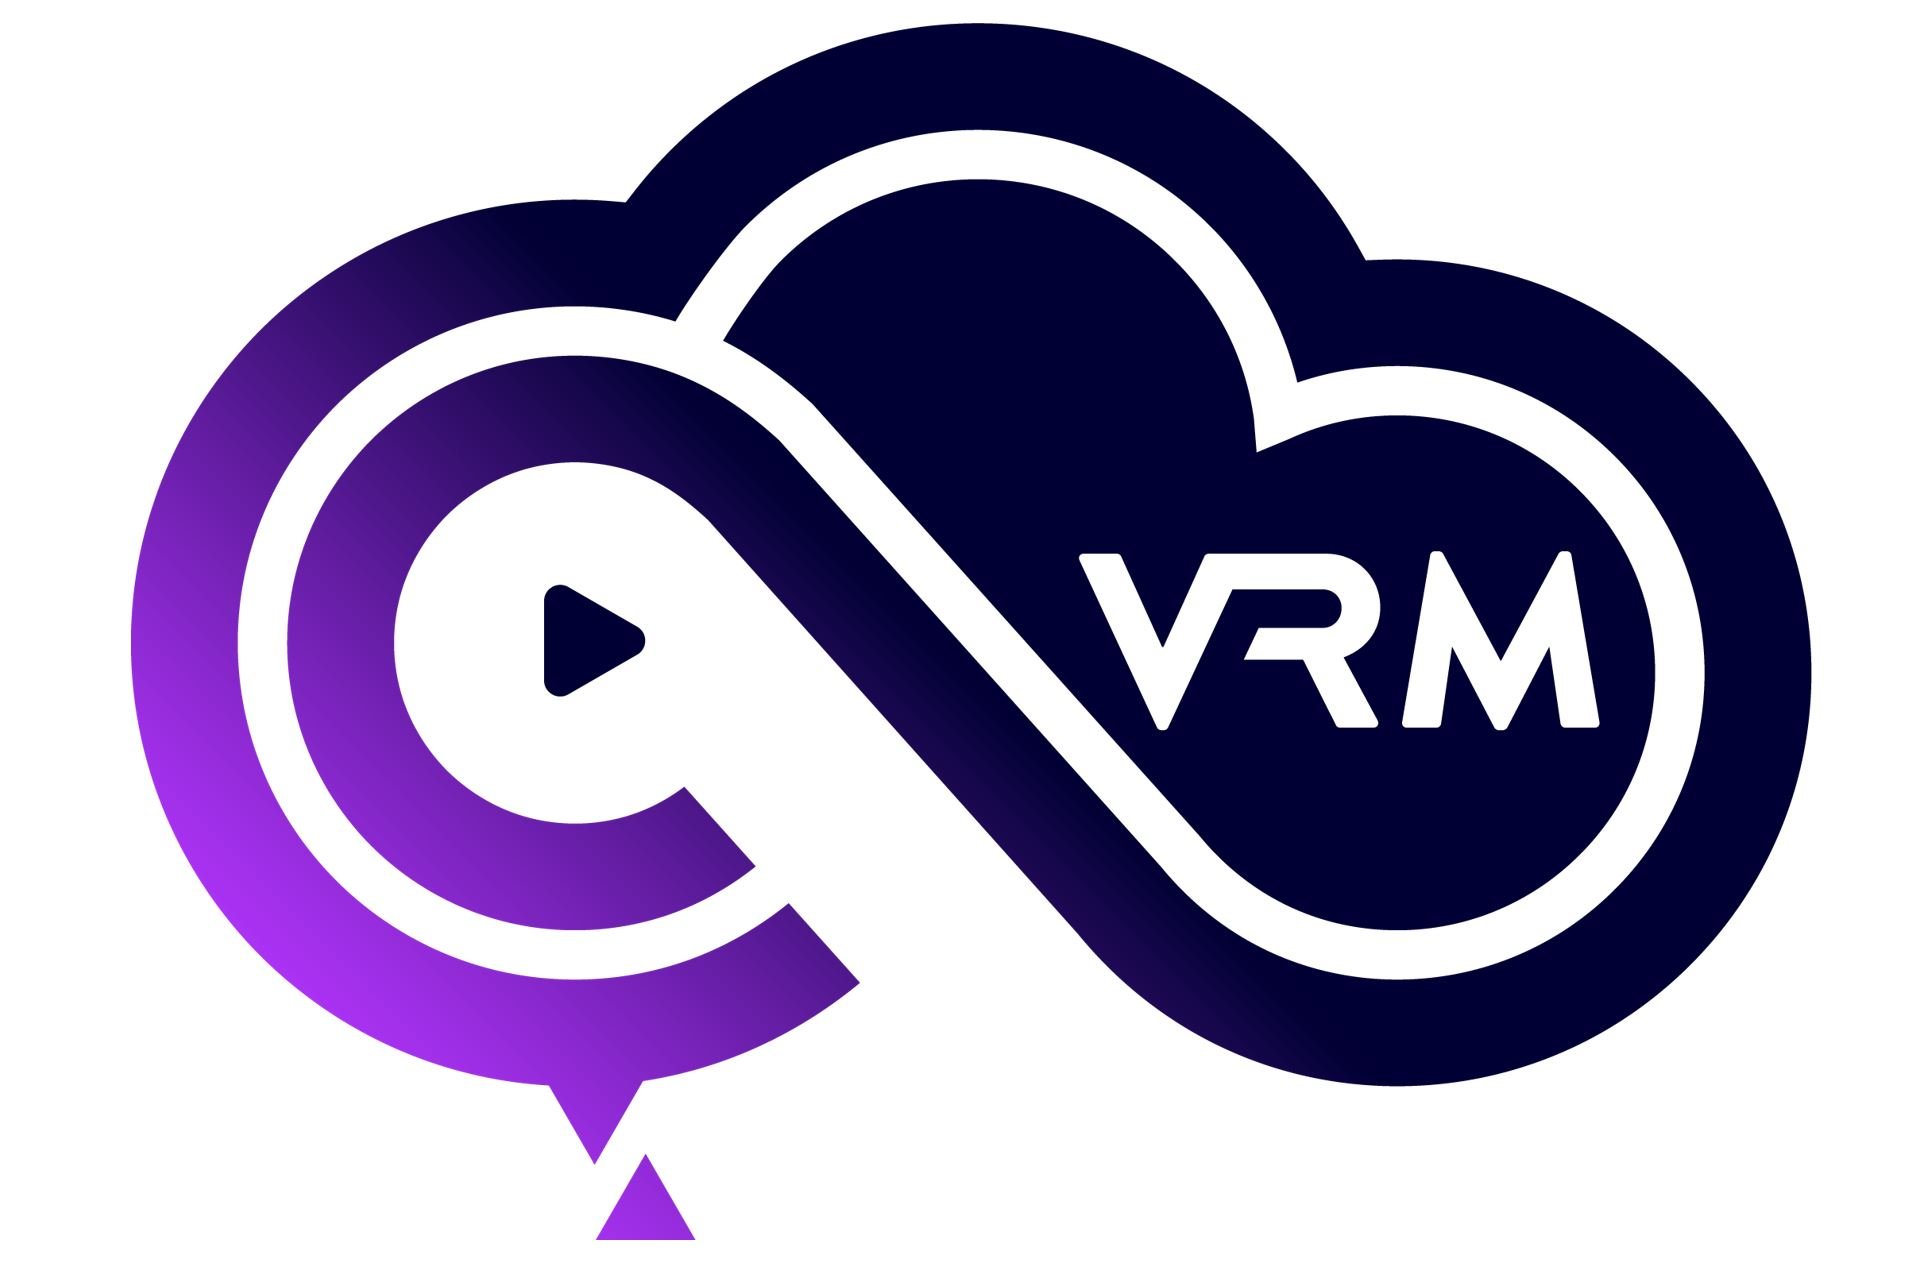 Cloud VRM logo